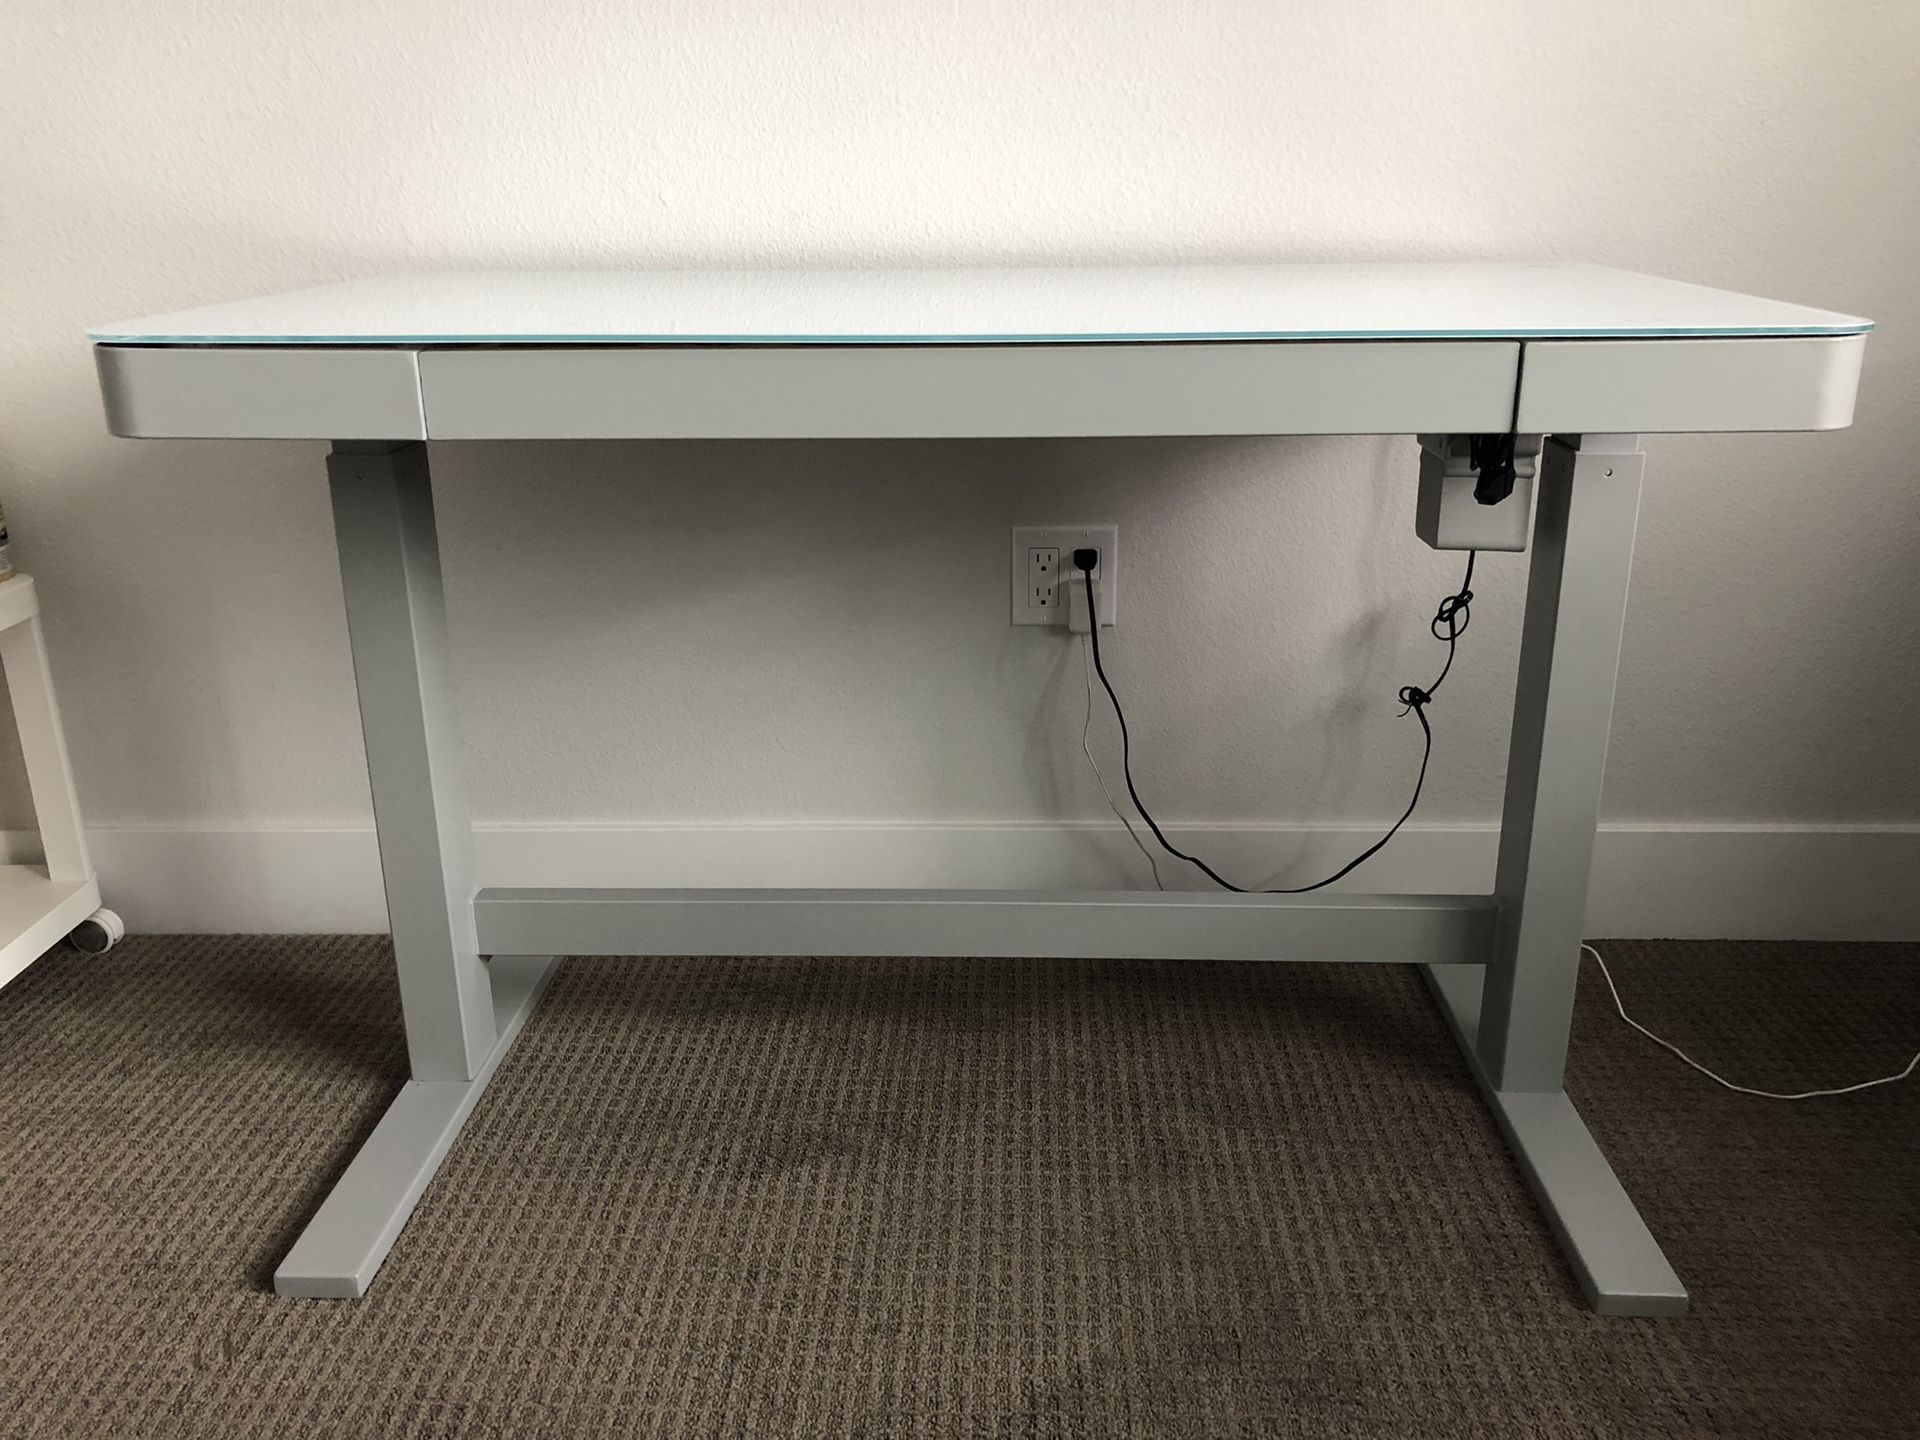 Tresanti adjustable height desk from Costco